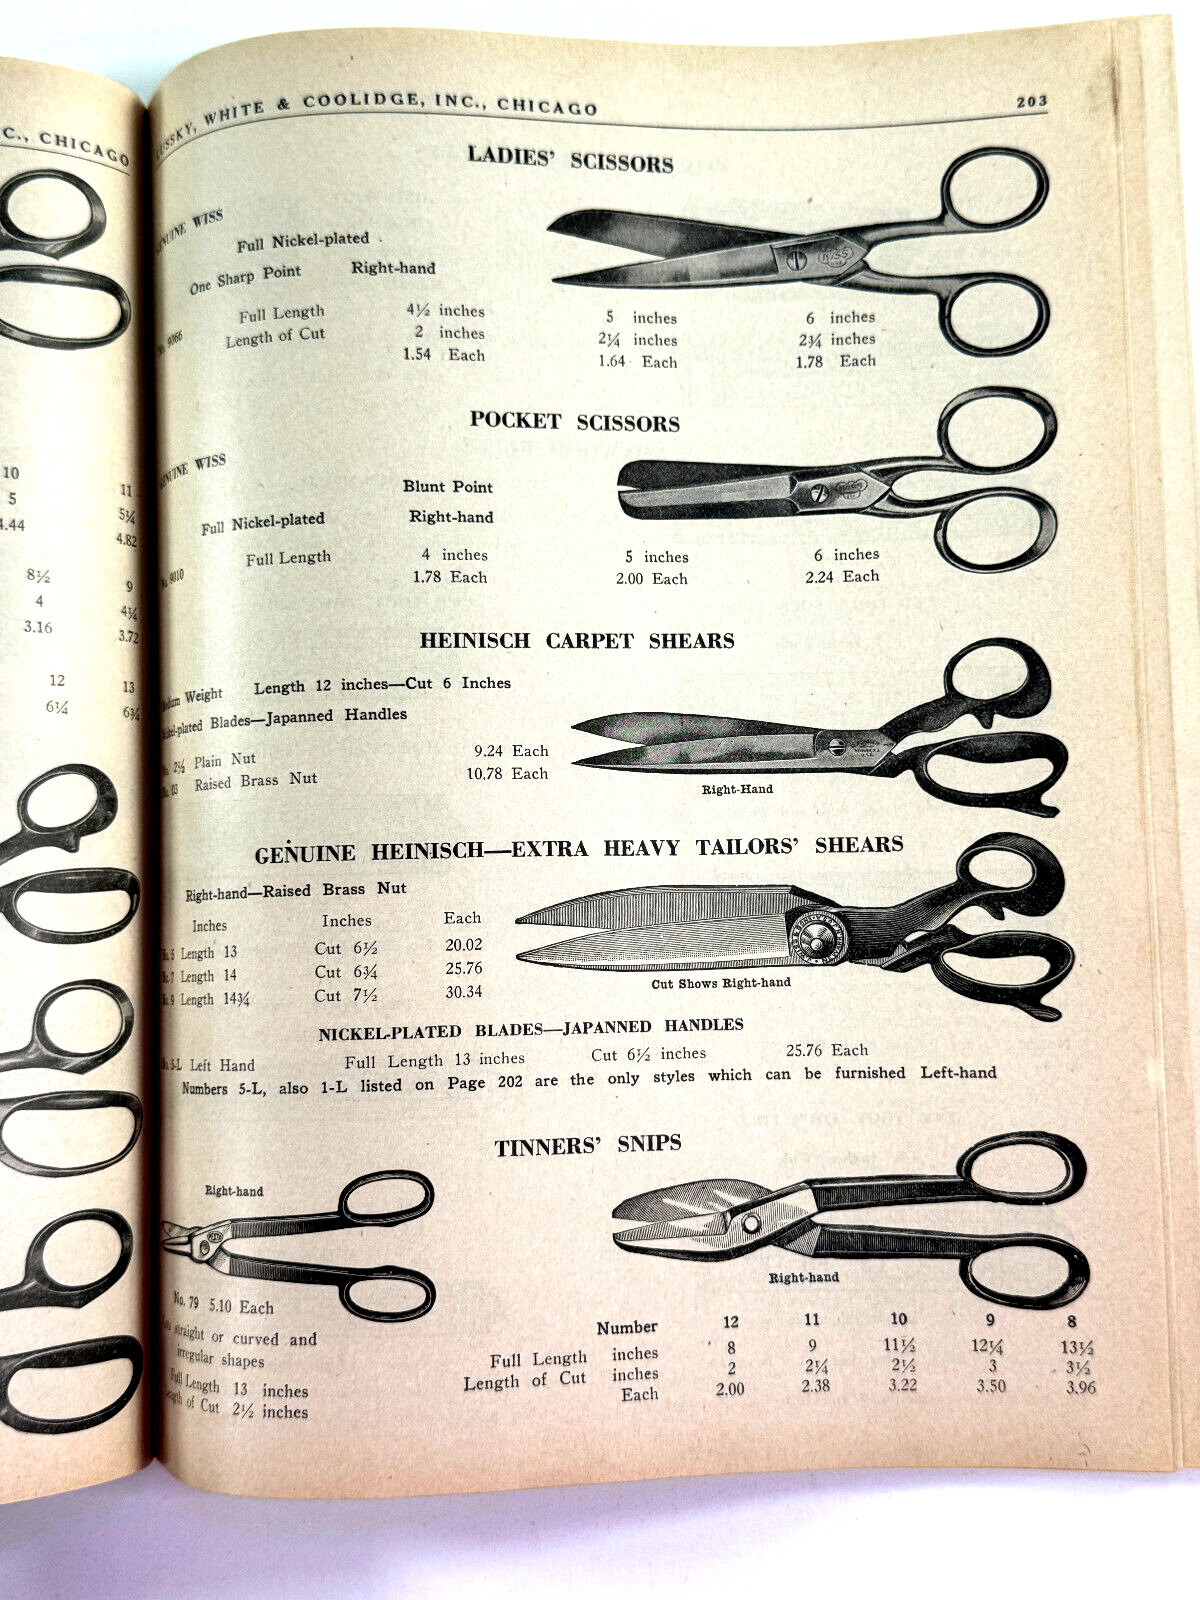 vtg 1931 Lussky White Coolidge Hardware Catalog Chicago IL scissors